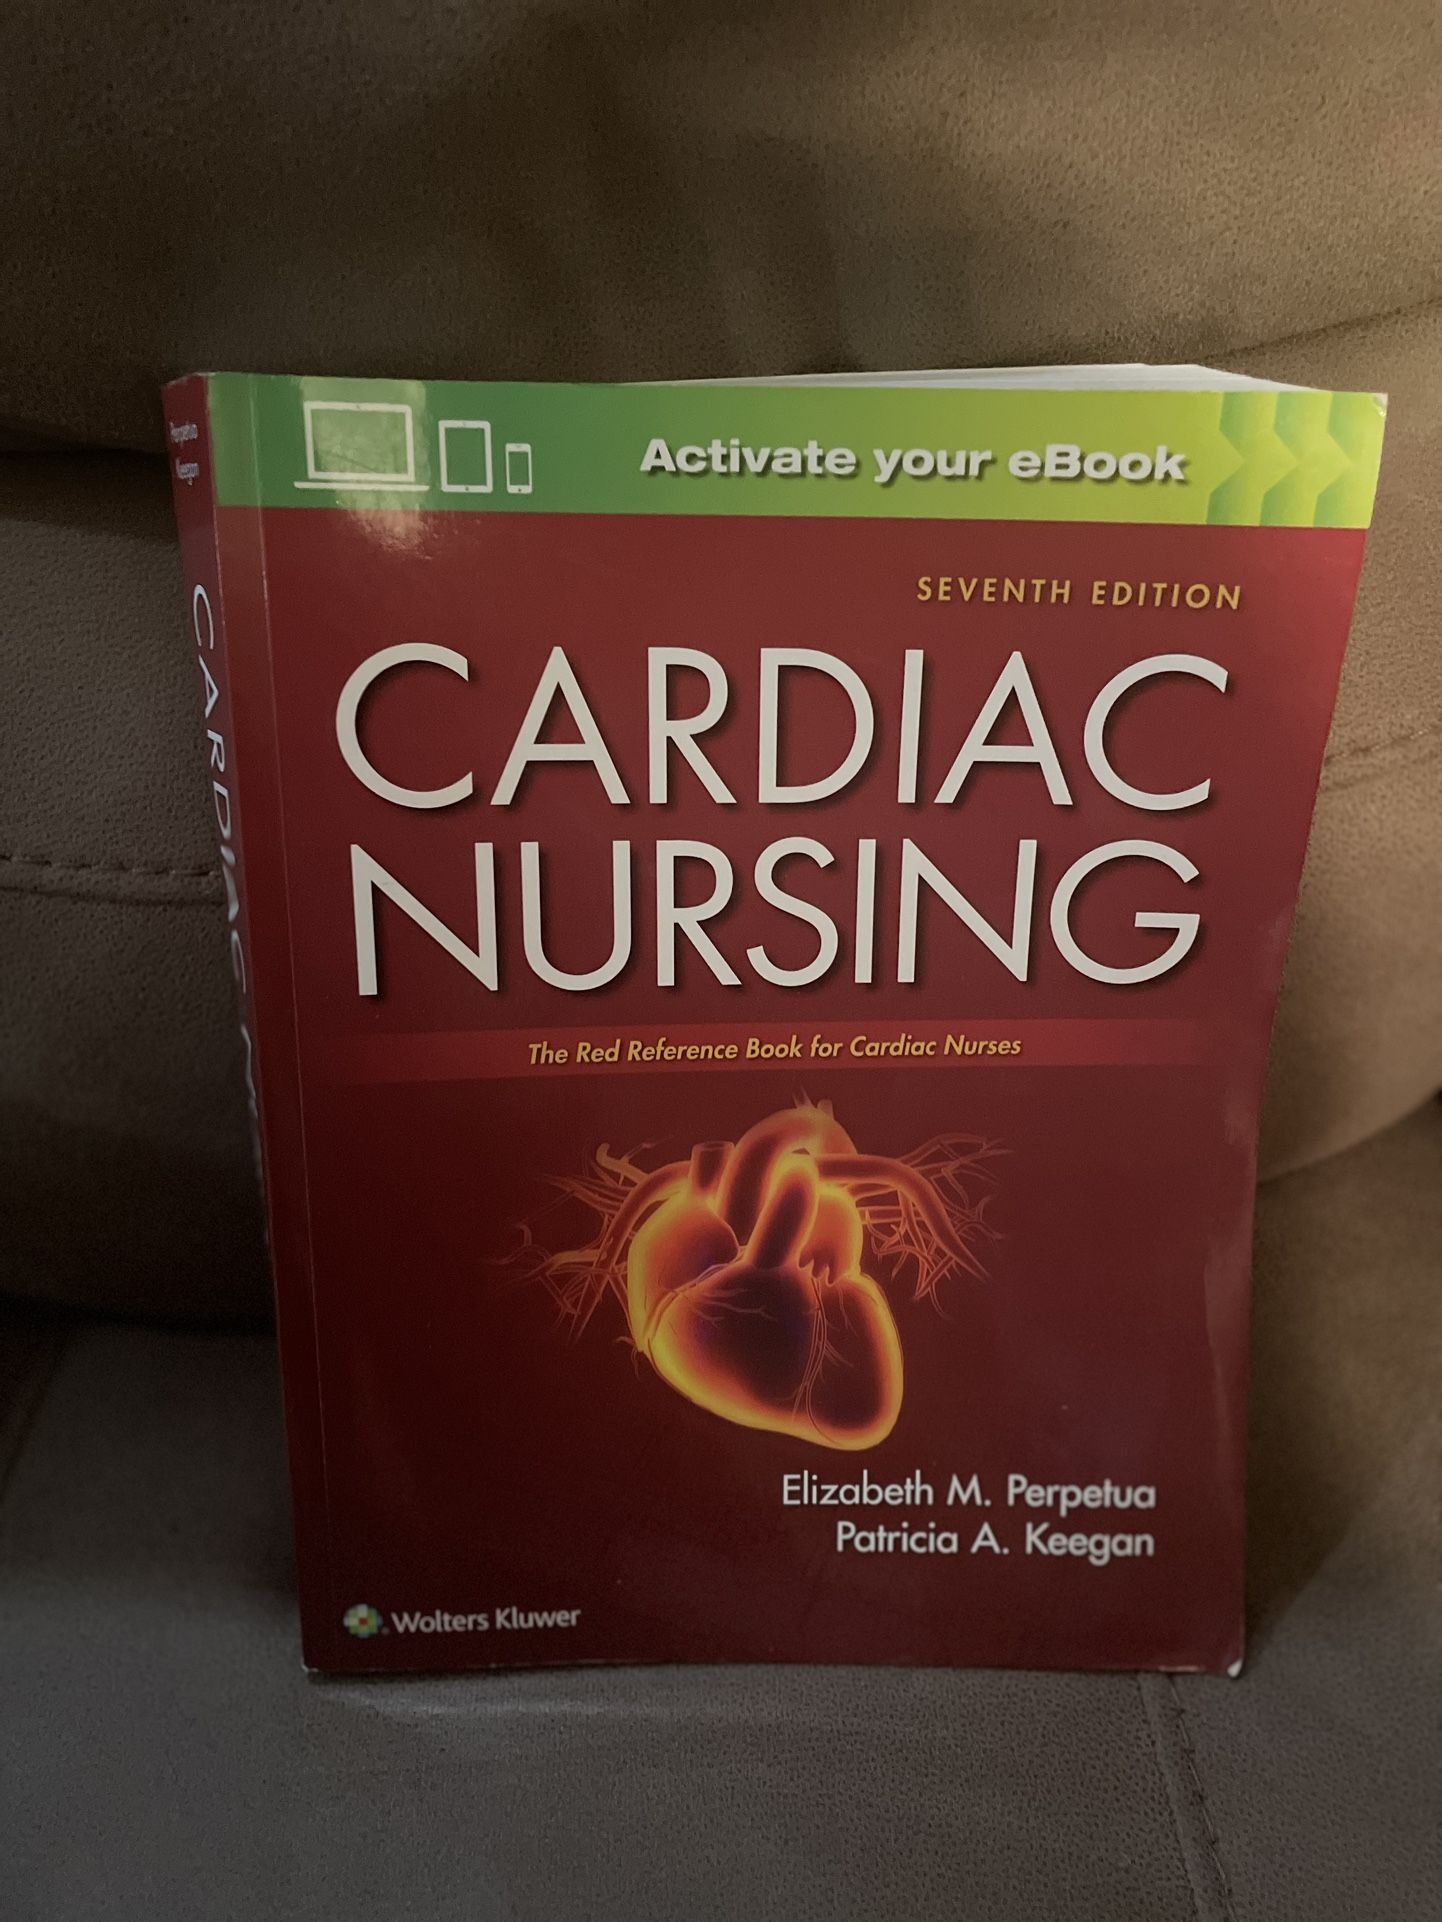 Cardiac Nursing 